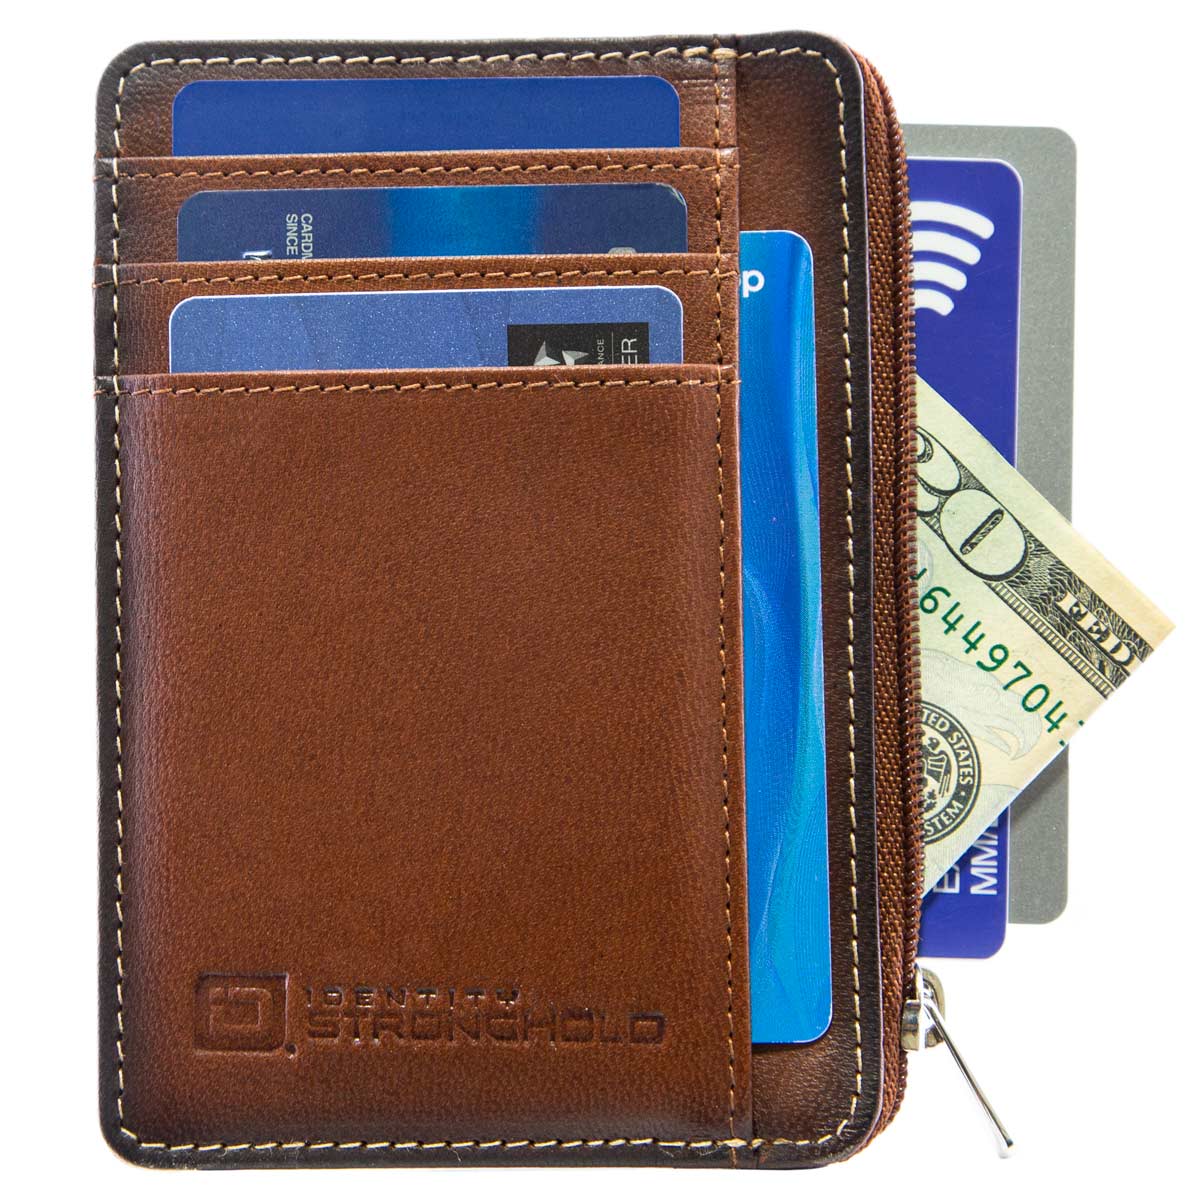 Womens RFID Wallet Deluxe Checkbook Clutch